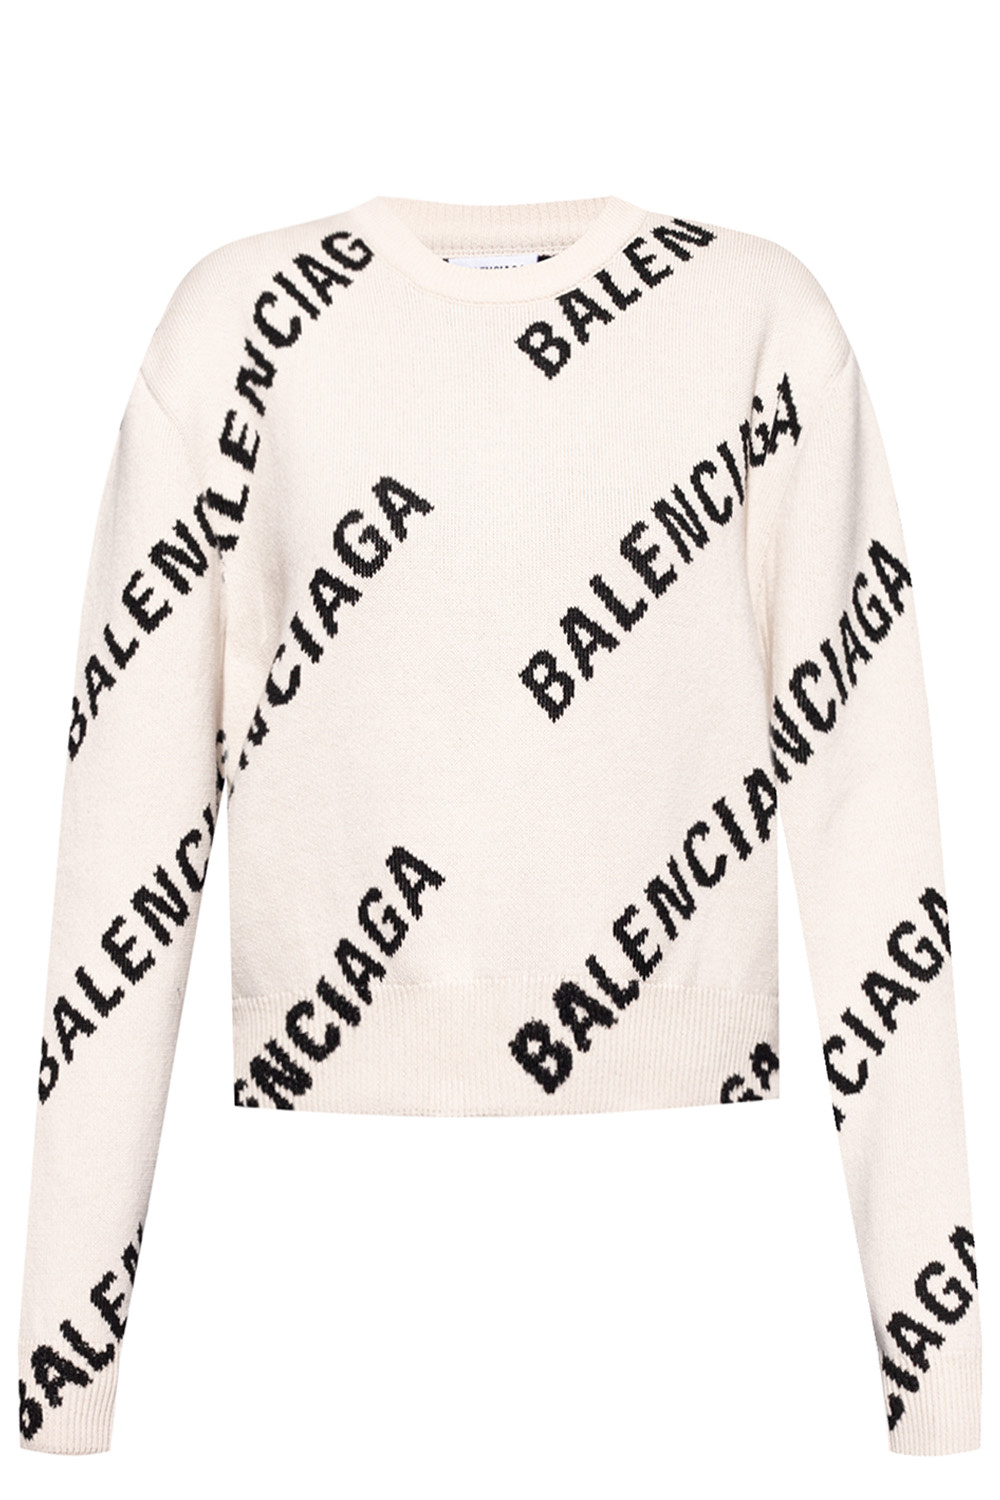 IetpShops Cambodia - New Love Club embroidered dolphin t-shirt - Cream  Sweater with logo Balenciaga